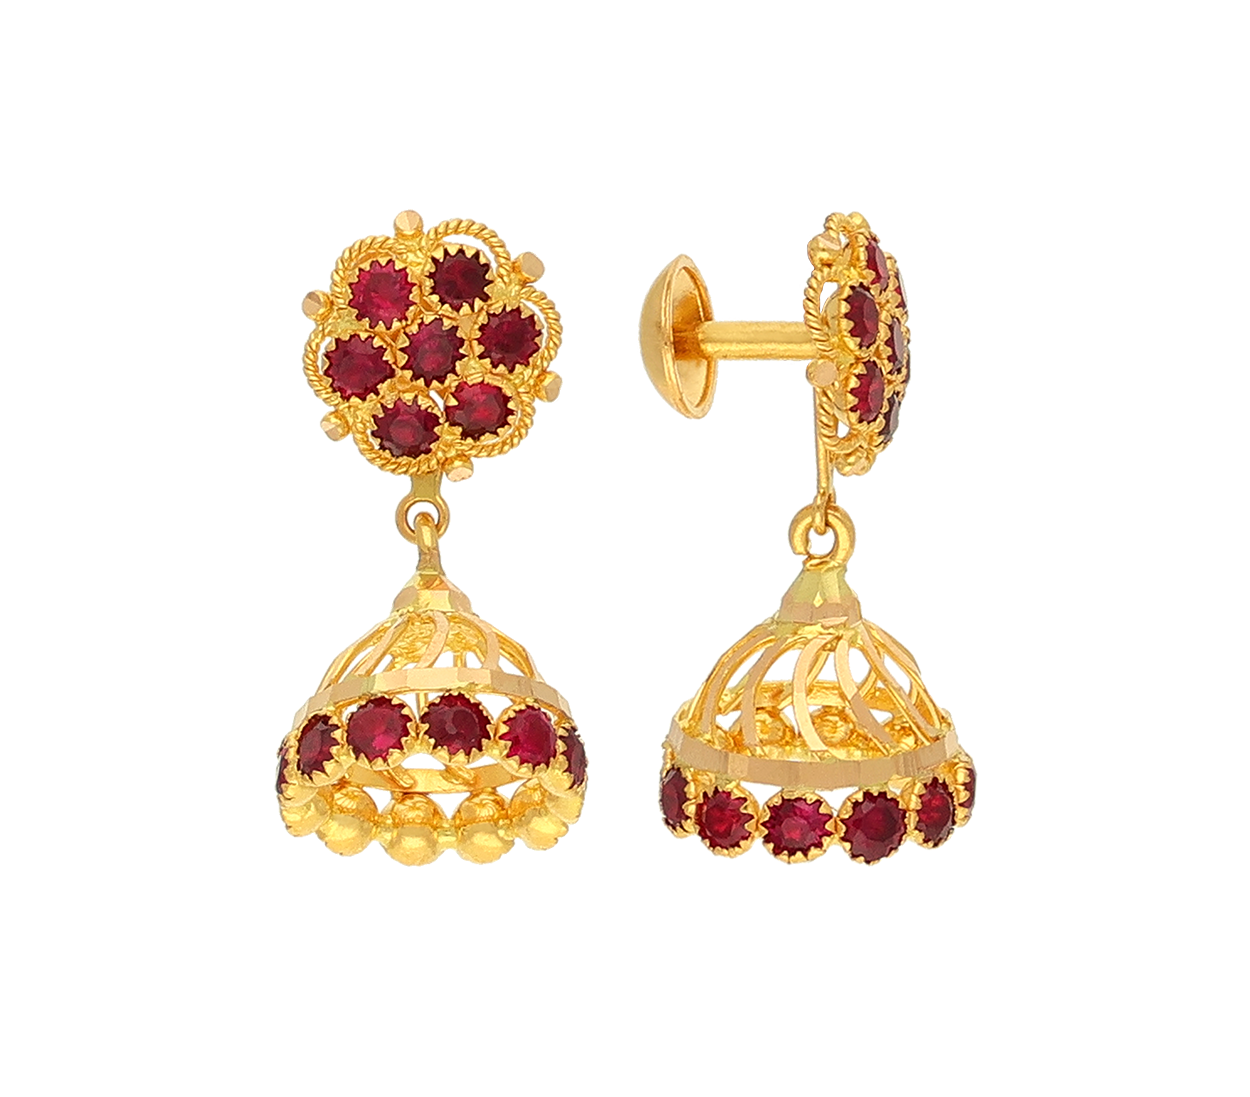 Mekkna Elegant Gold Plated Jhumka Earrings For Women at Rs 349.00 | गोल्ड  प्लेटेड झुमका, सोना चढ़ा हुआ झुमका - Bhagya Lakshmi Enterprises, Rohtak |  ID: 2851115610191